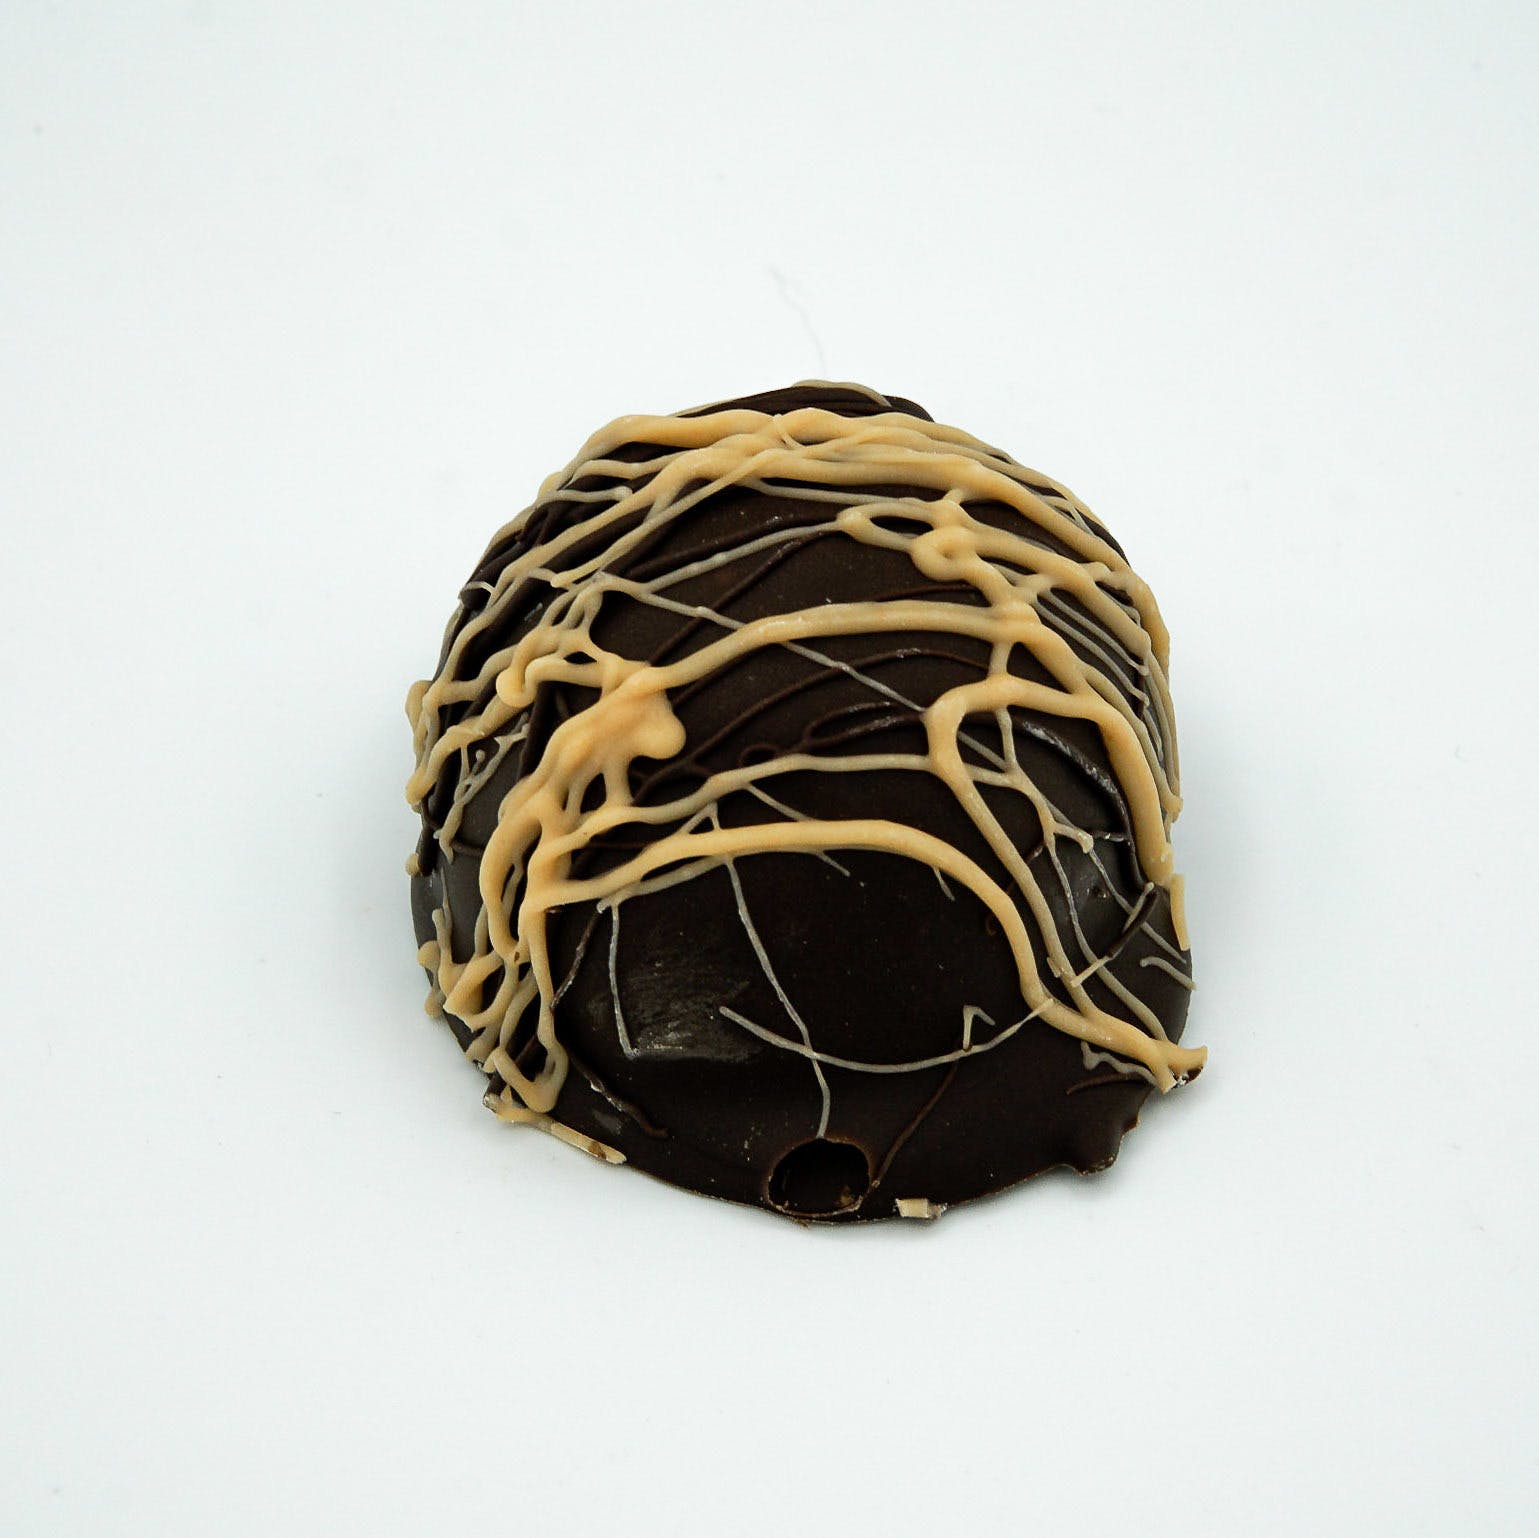 edible-kandyman-orange-chocolate-truffle-30mg-each